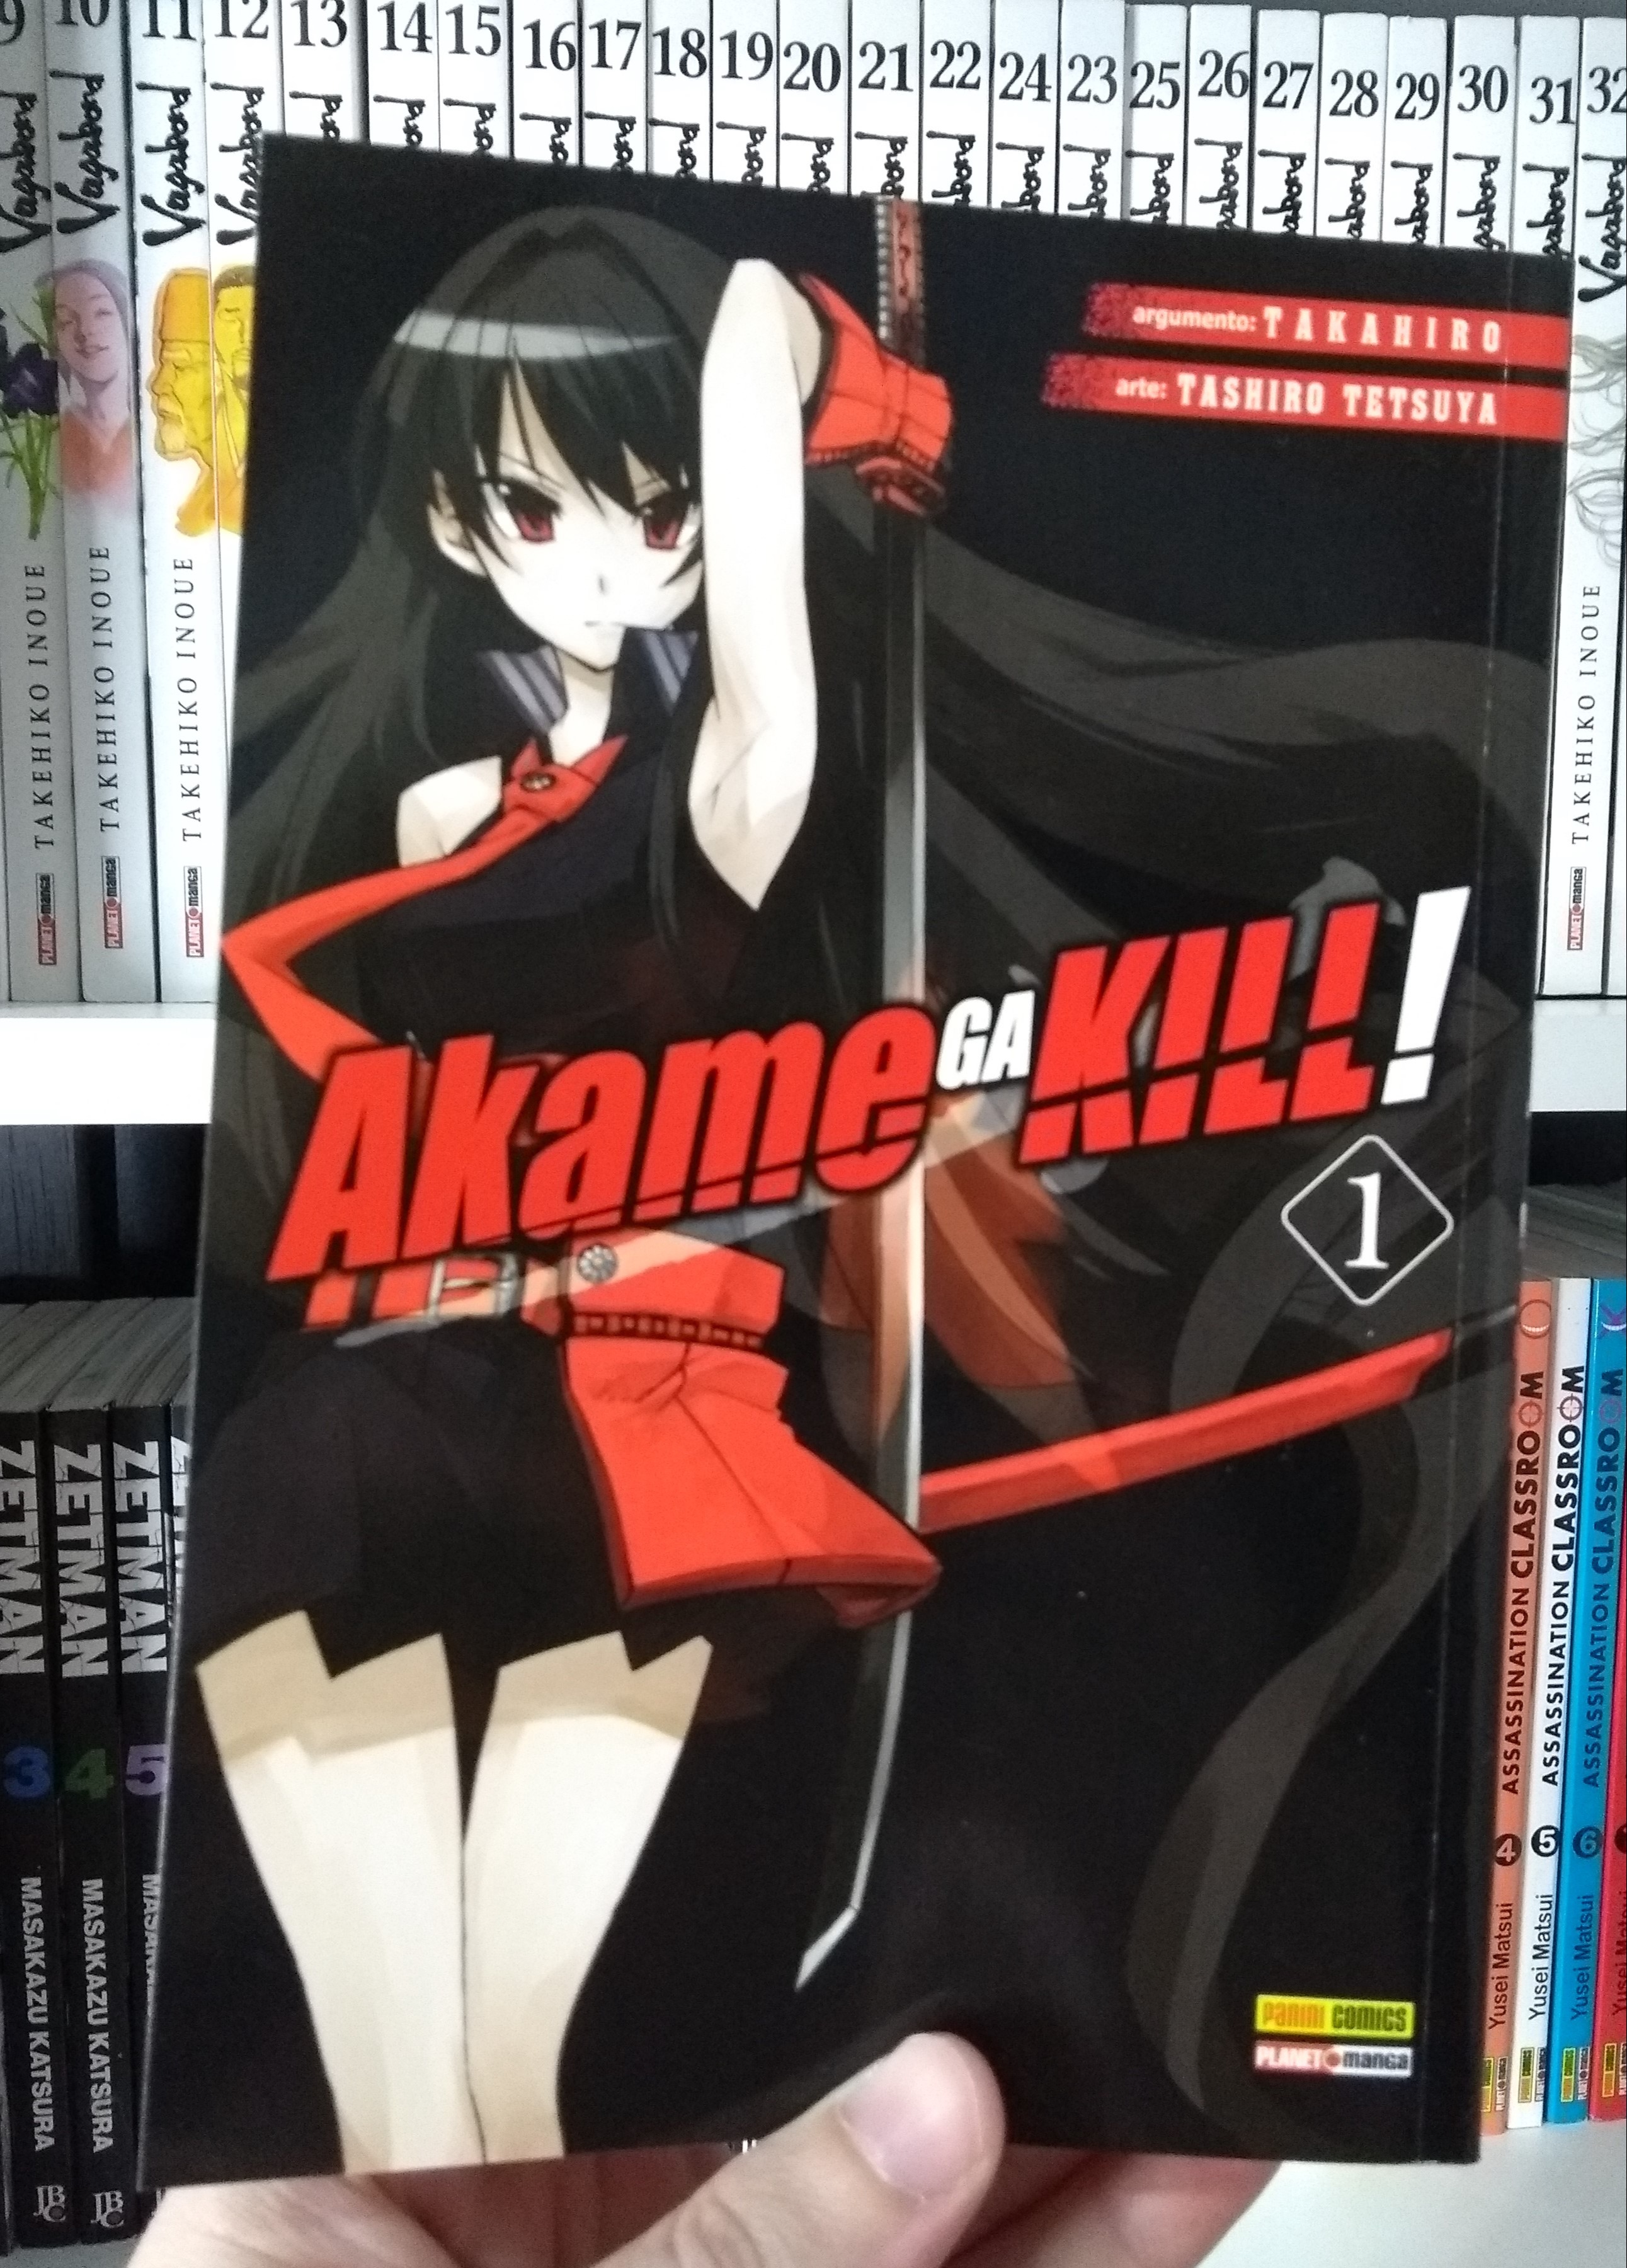 Livro Akame Ga Kill Zero! 4 de Takahiro (Espanhol)